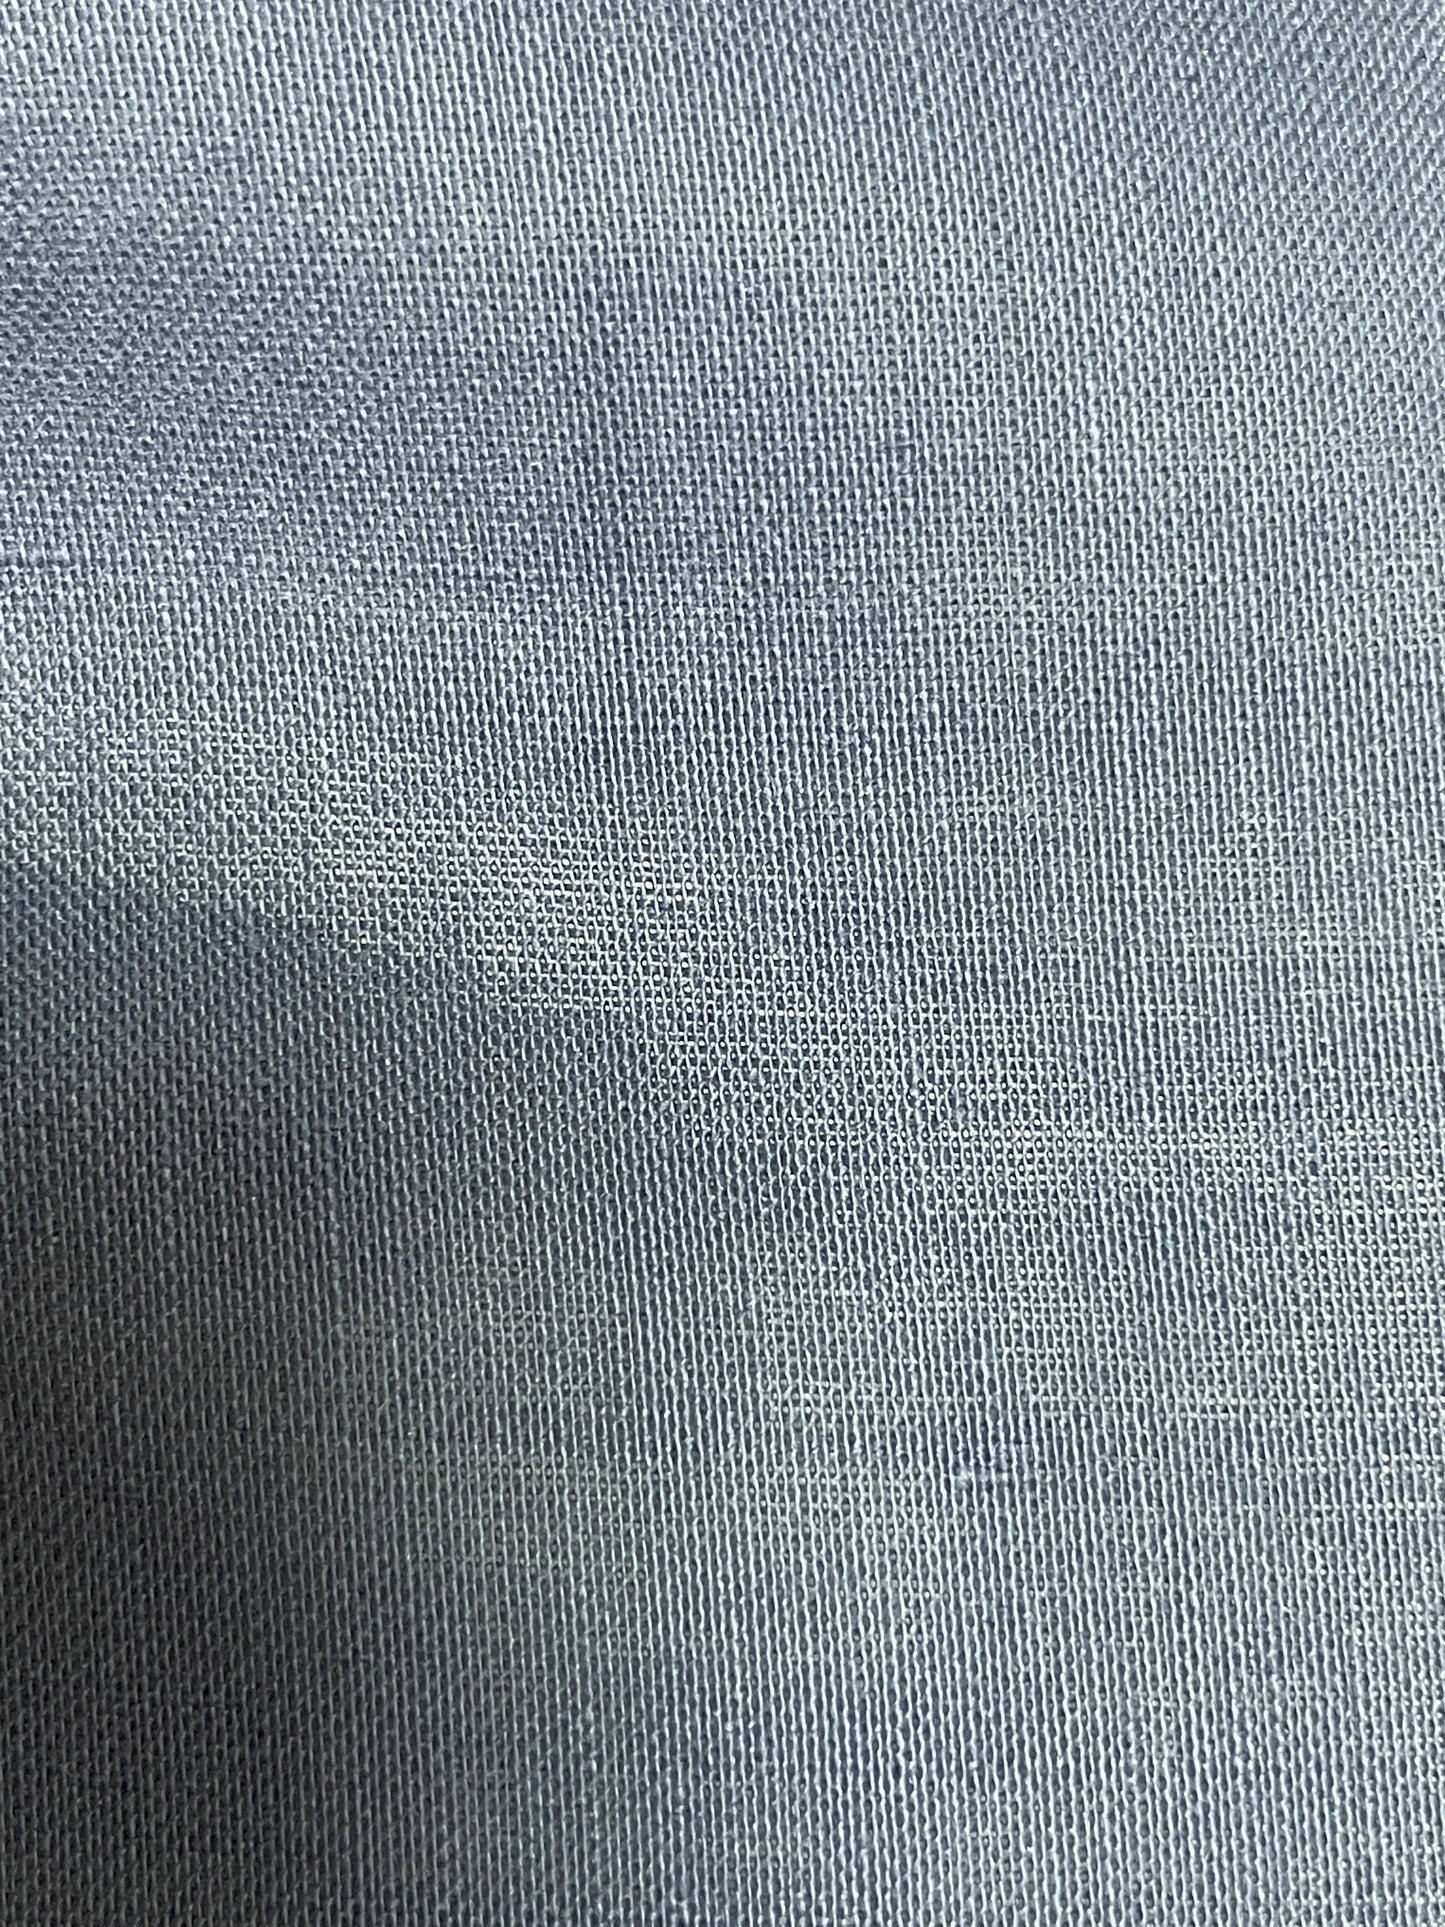 130g Ramie & Cotton Blended Fabric - Natasha Fabric